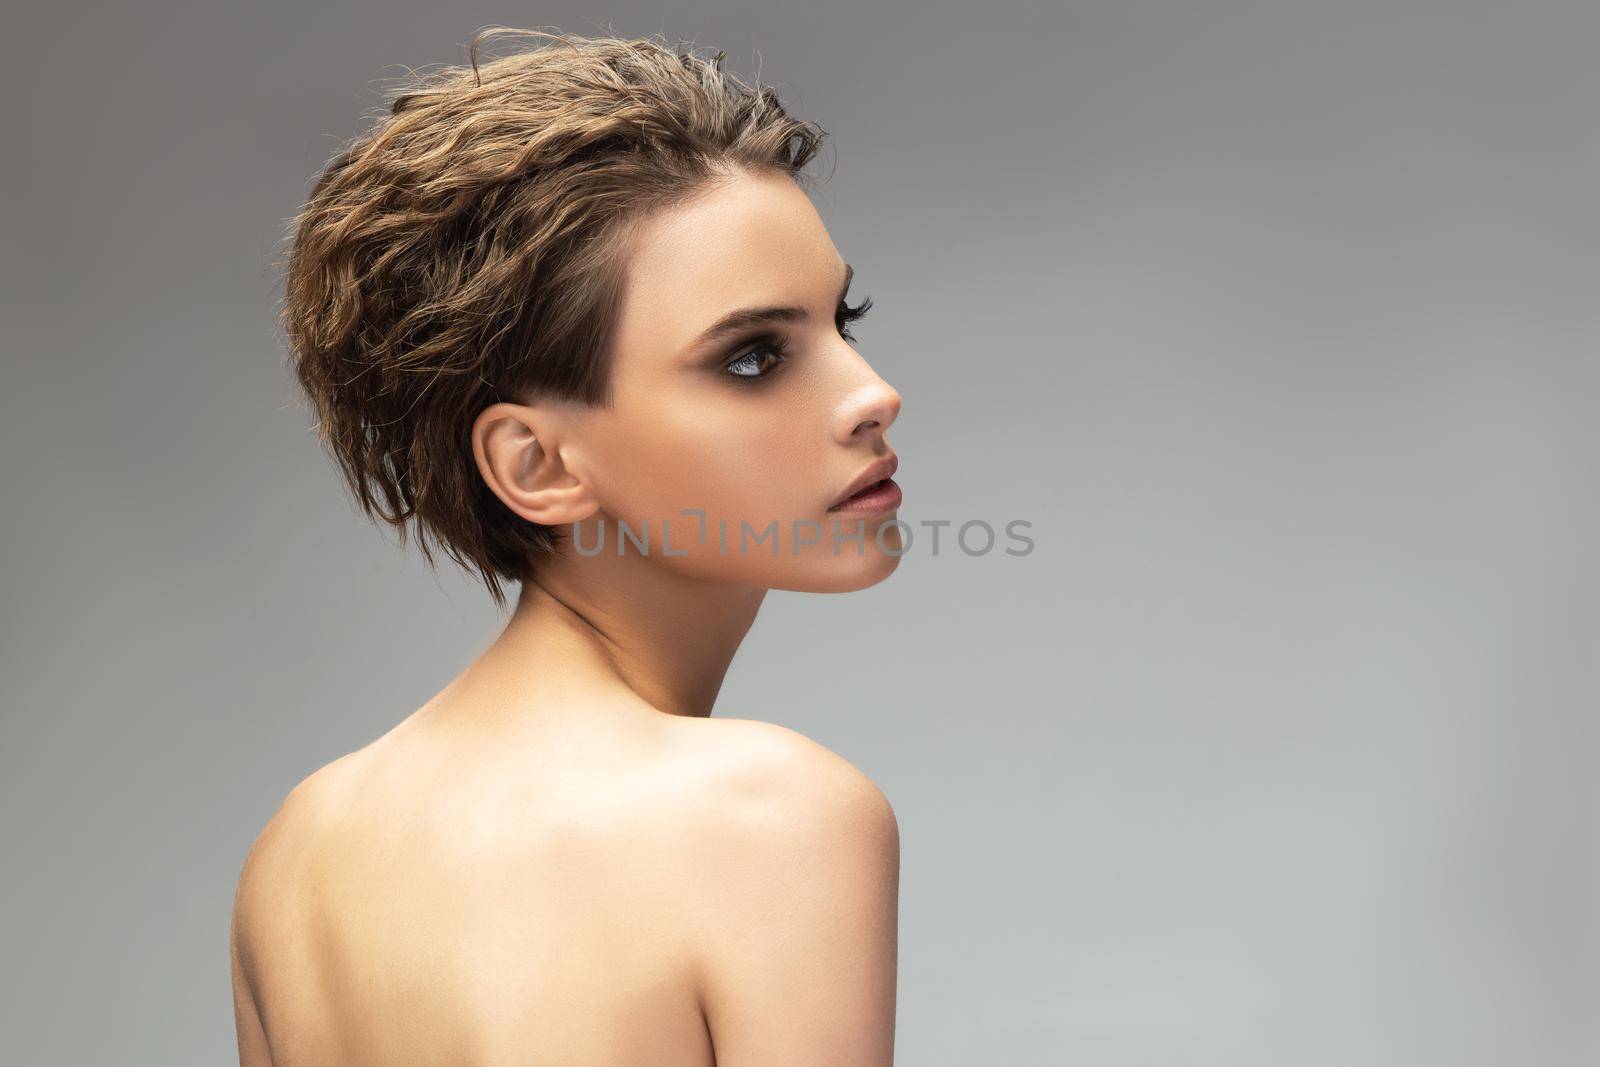 Glamorous portrait of young woman on gray background. by AliaksandrFilimonau